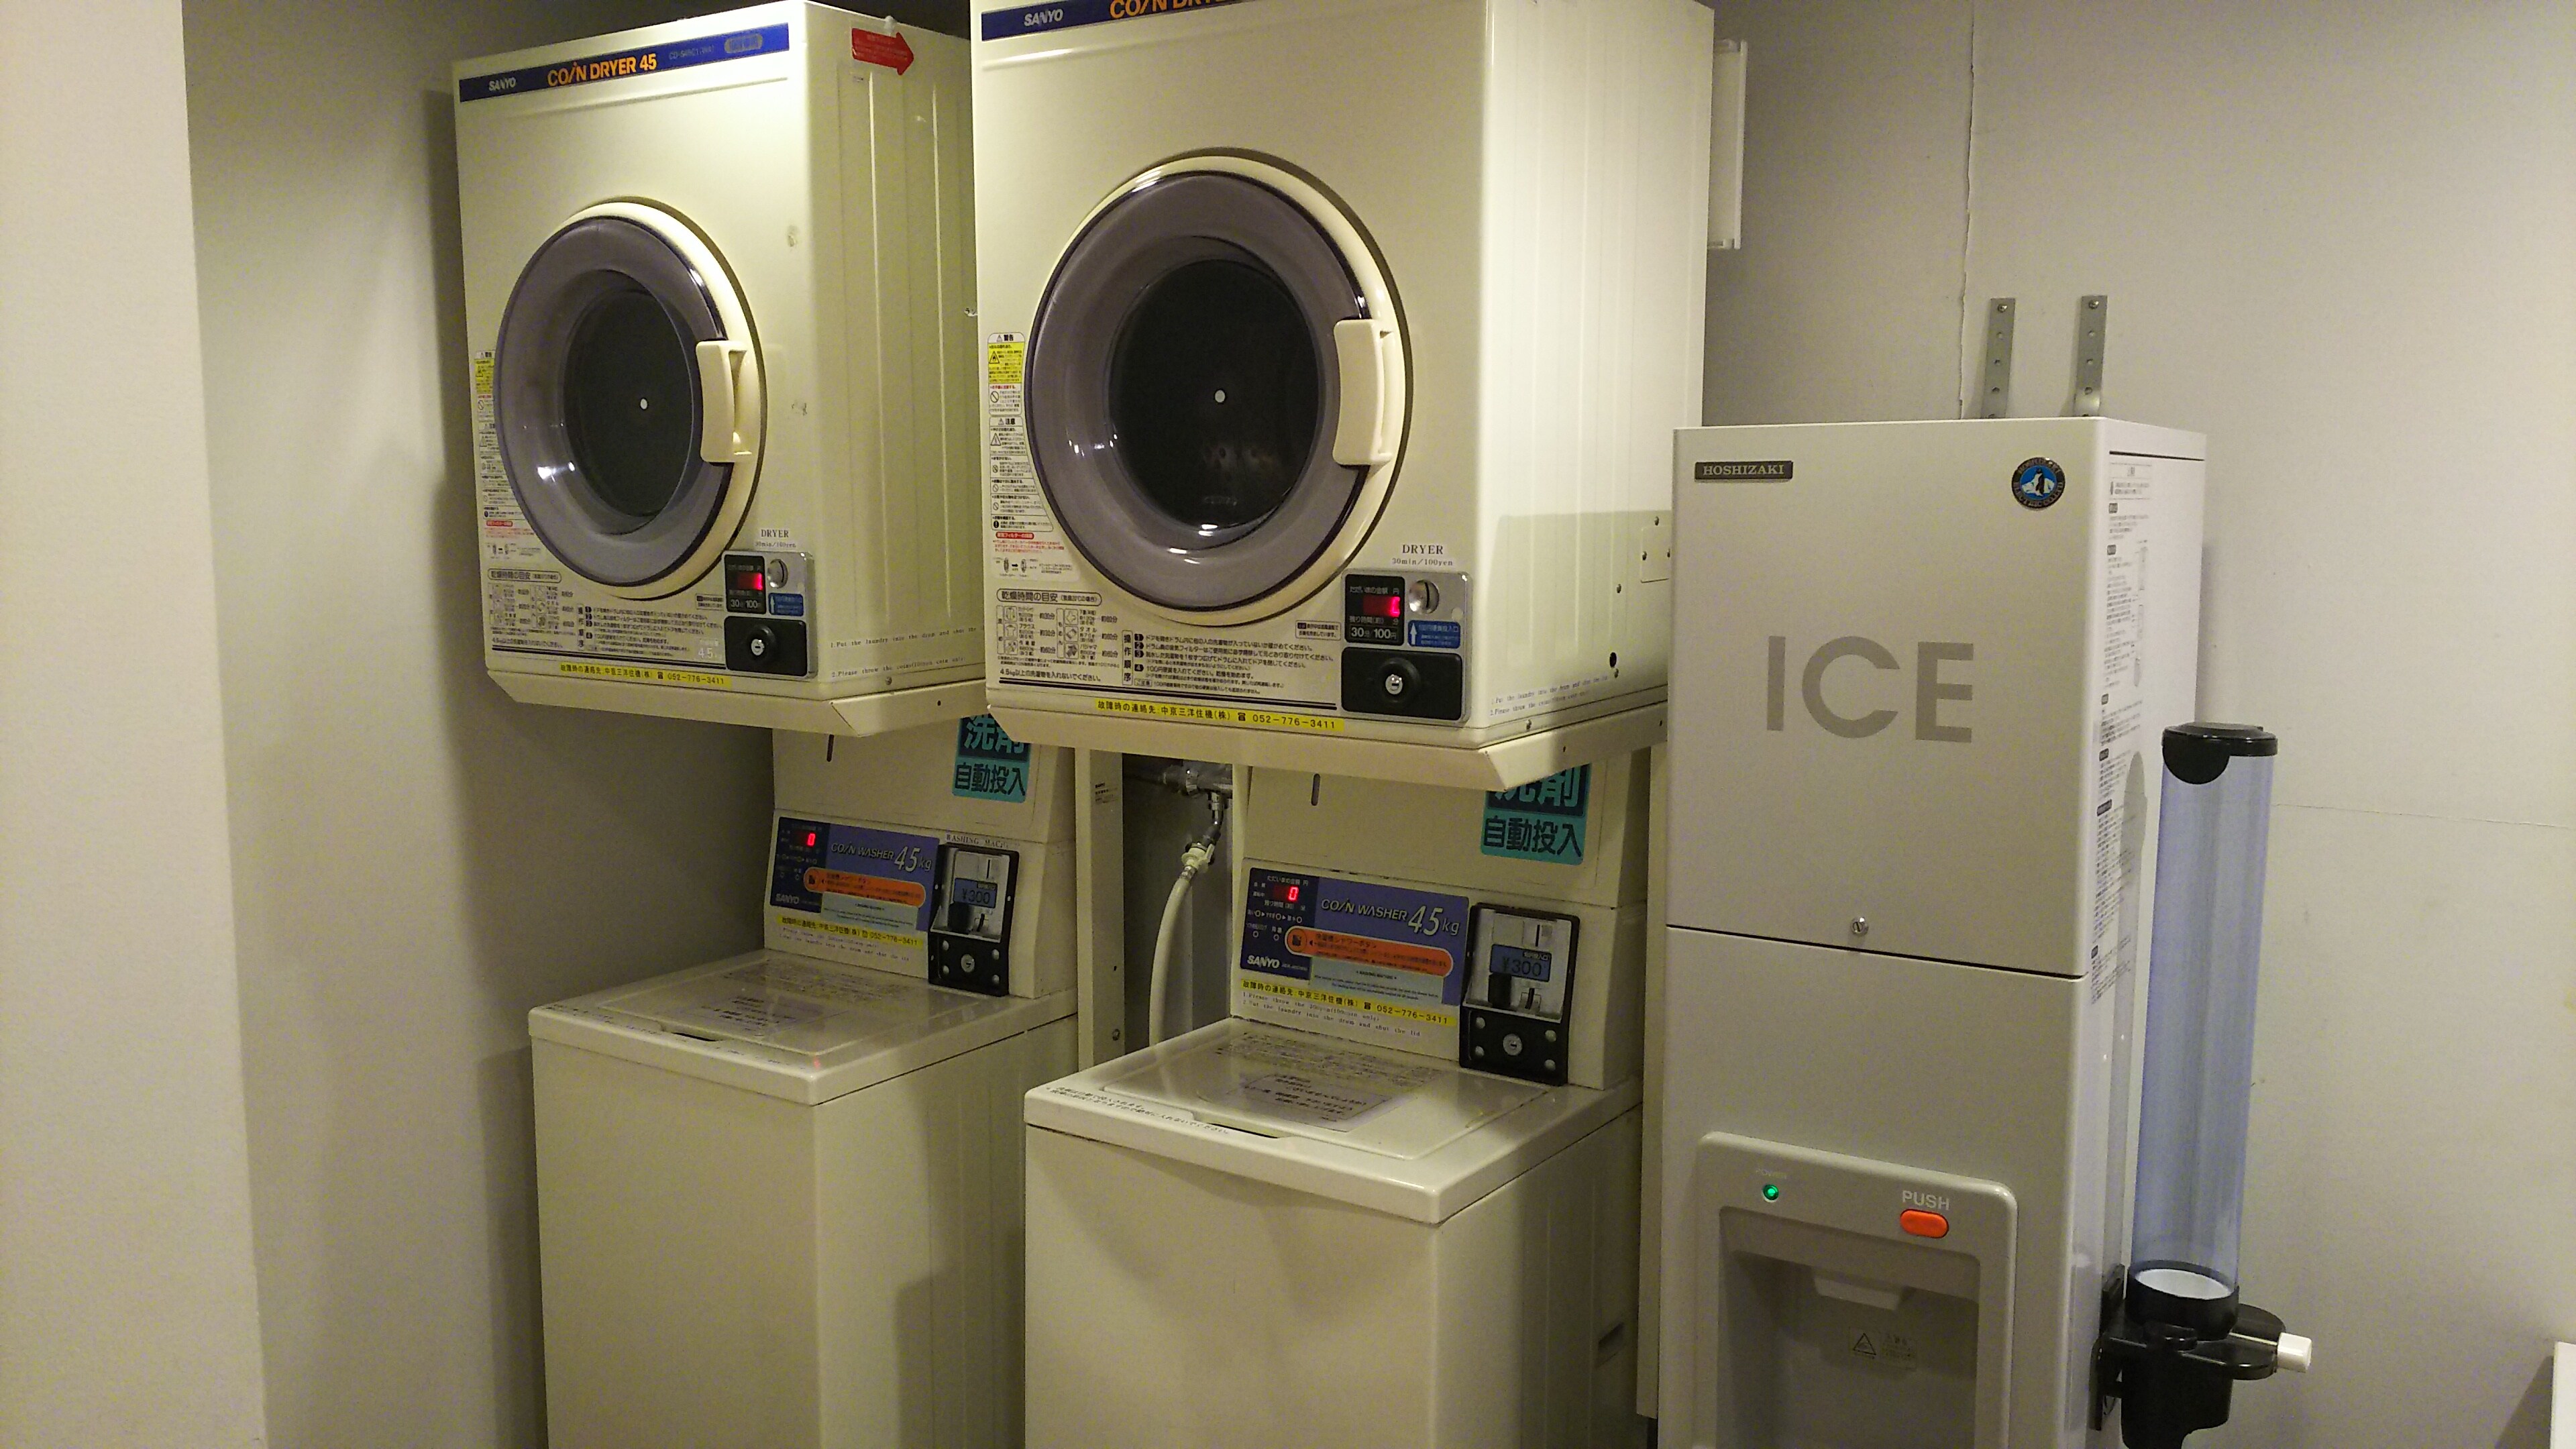 Coin laundry, ice machine